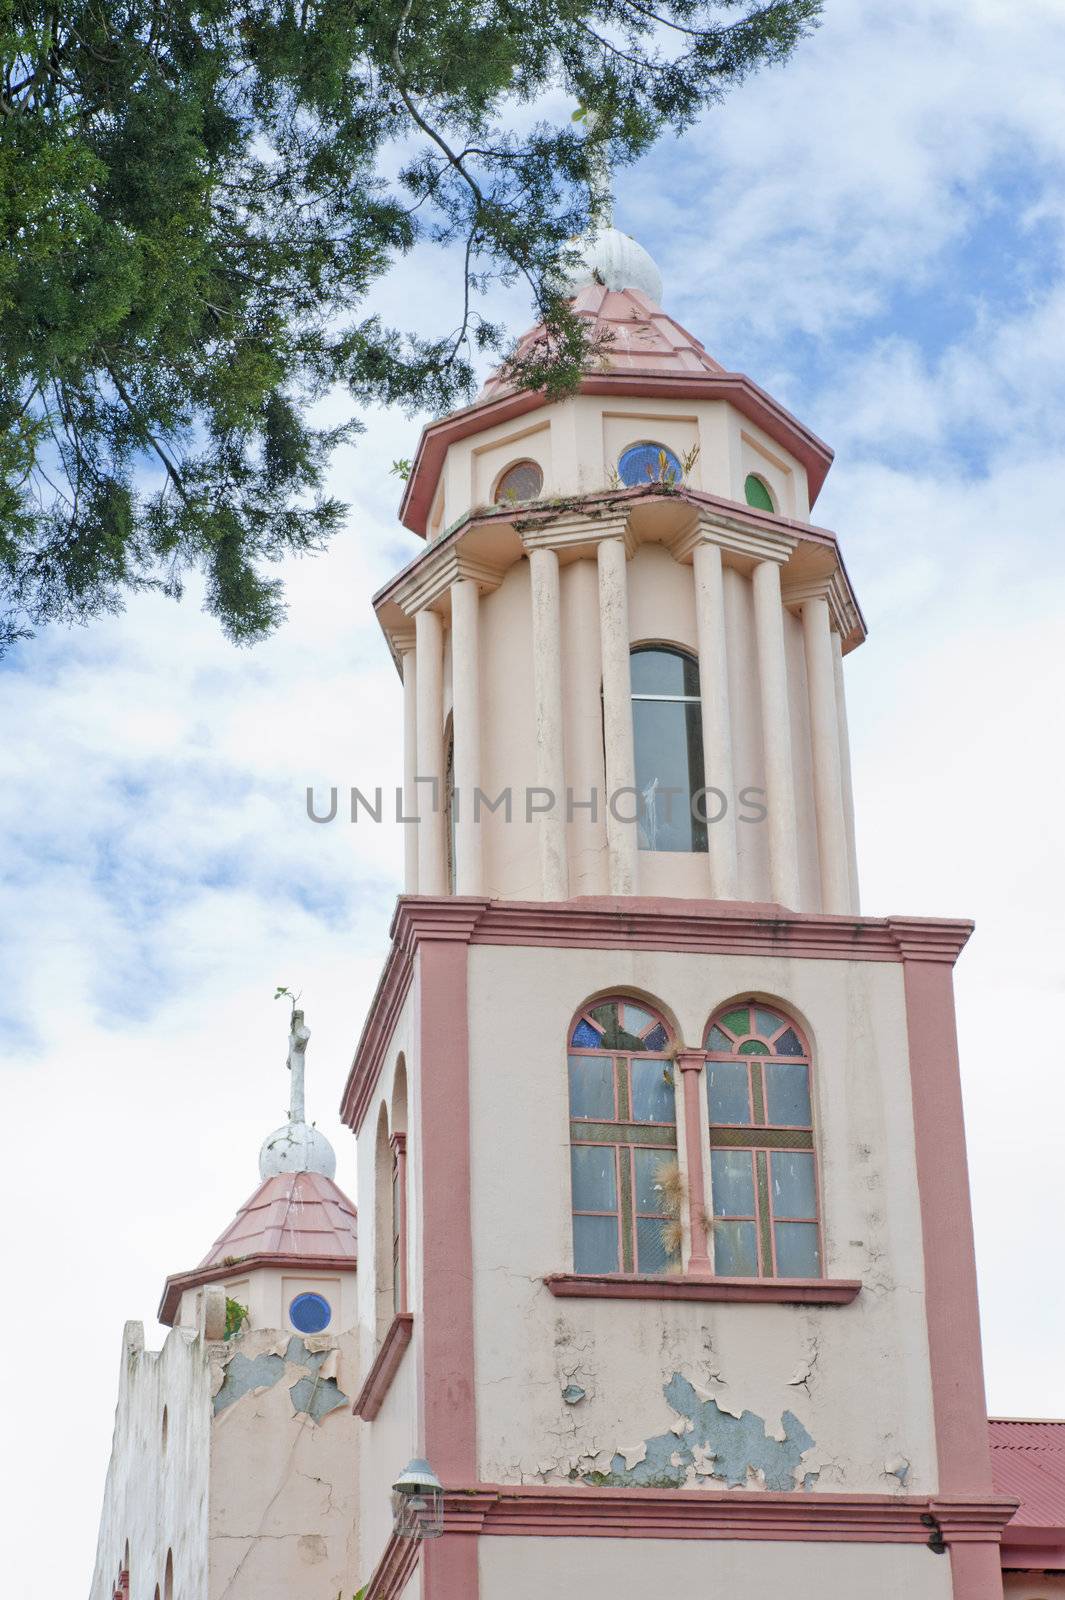 Steeple-Iglesia de San Roque by billberryphotography